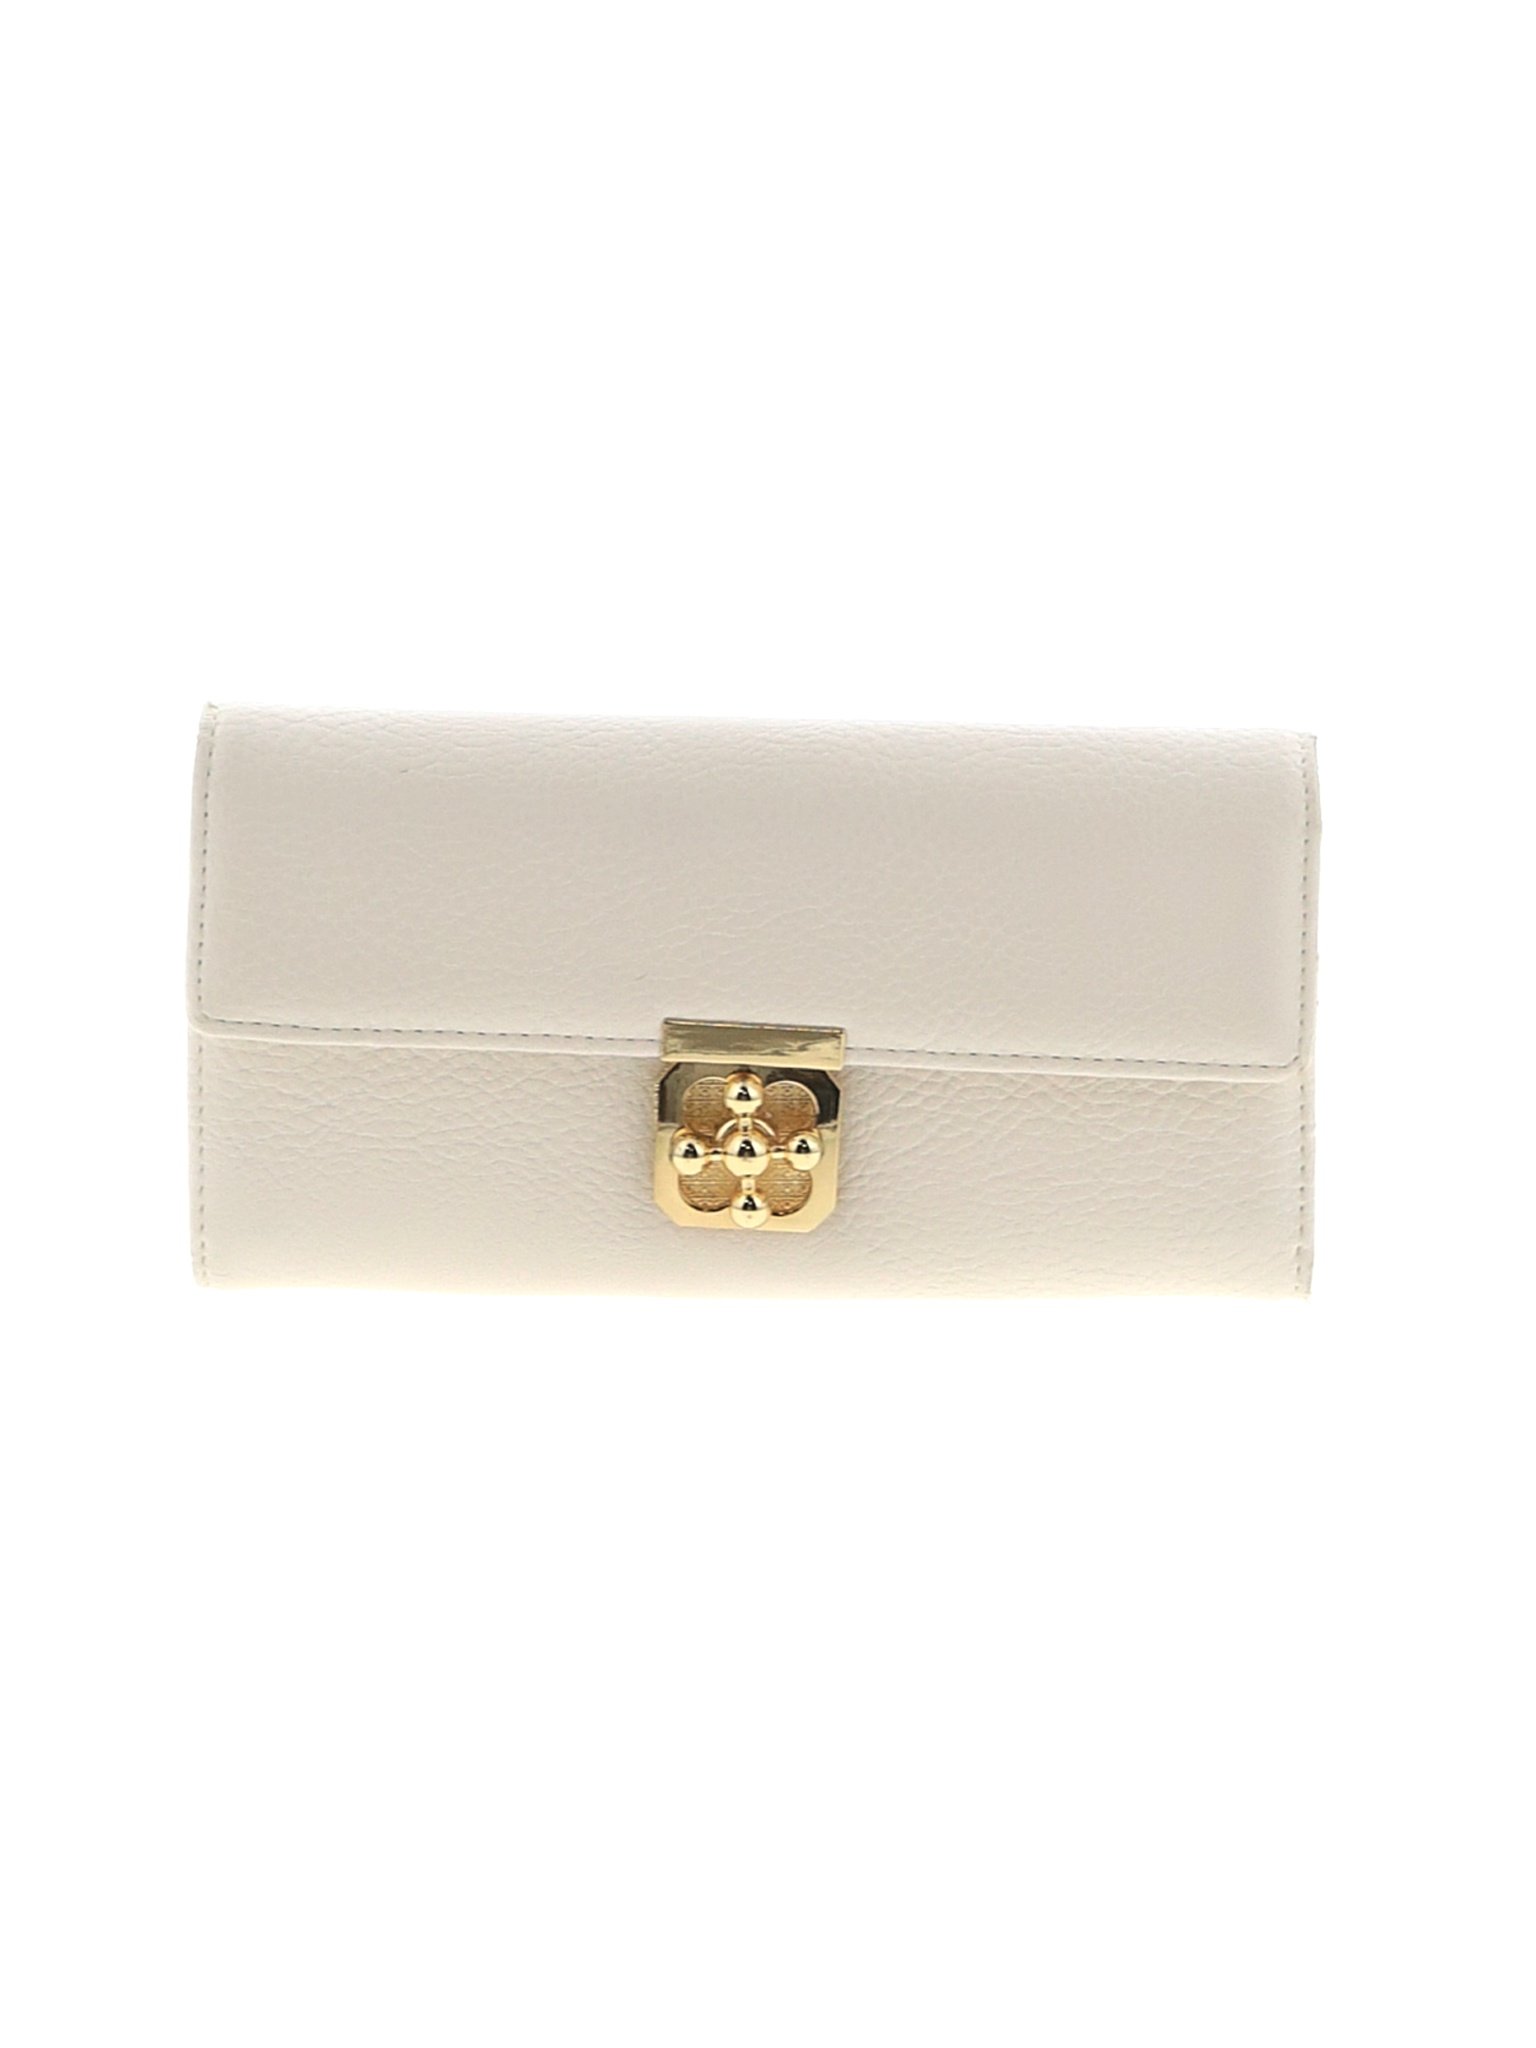 Unbranded Women White Wallet One Size | eBay